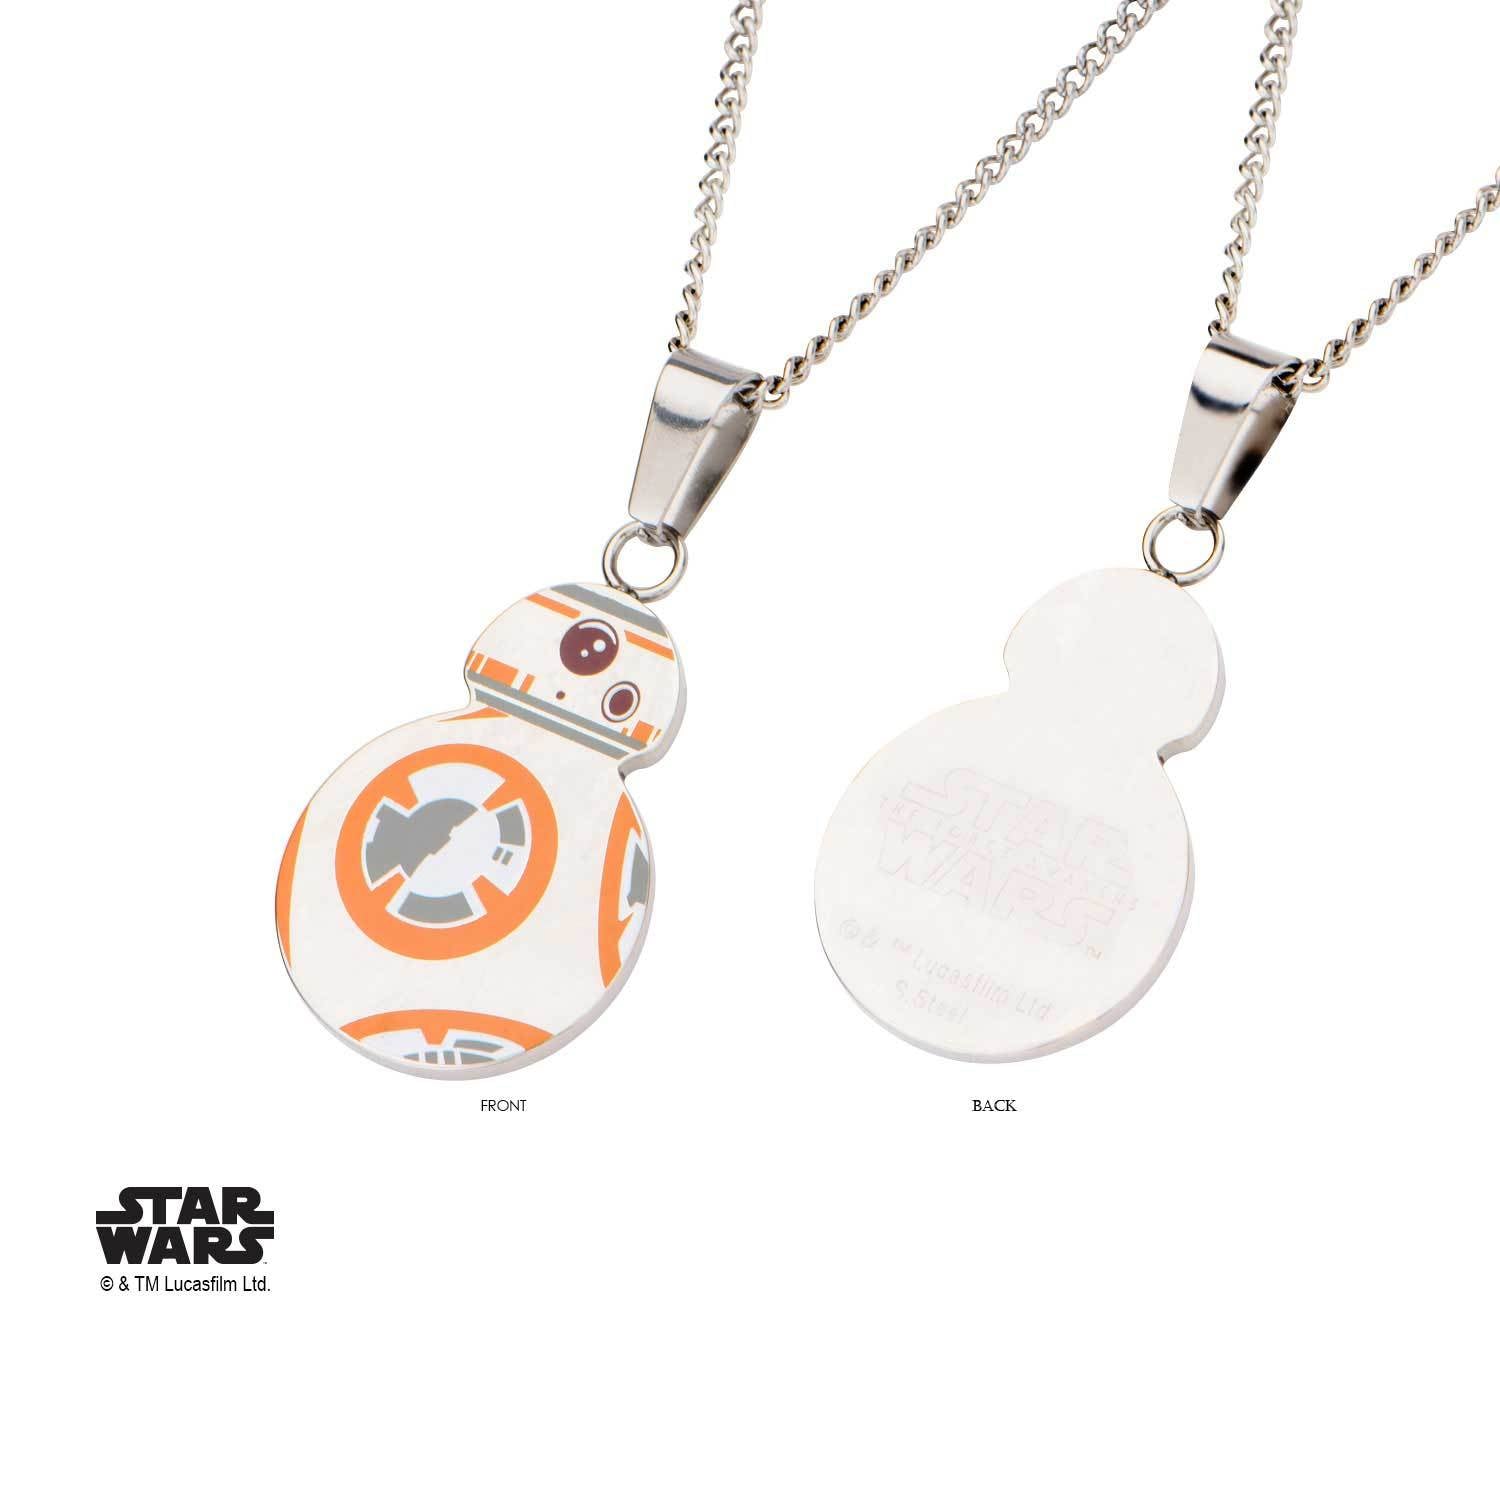 Star Wars Episode 7 Cut Out BB-8 Pendant Necklace